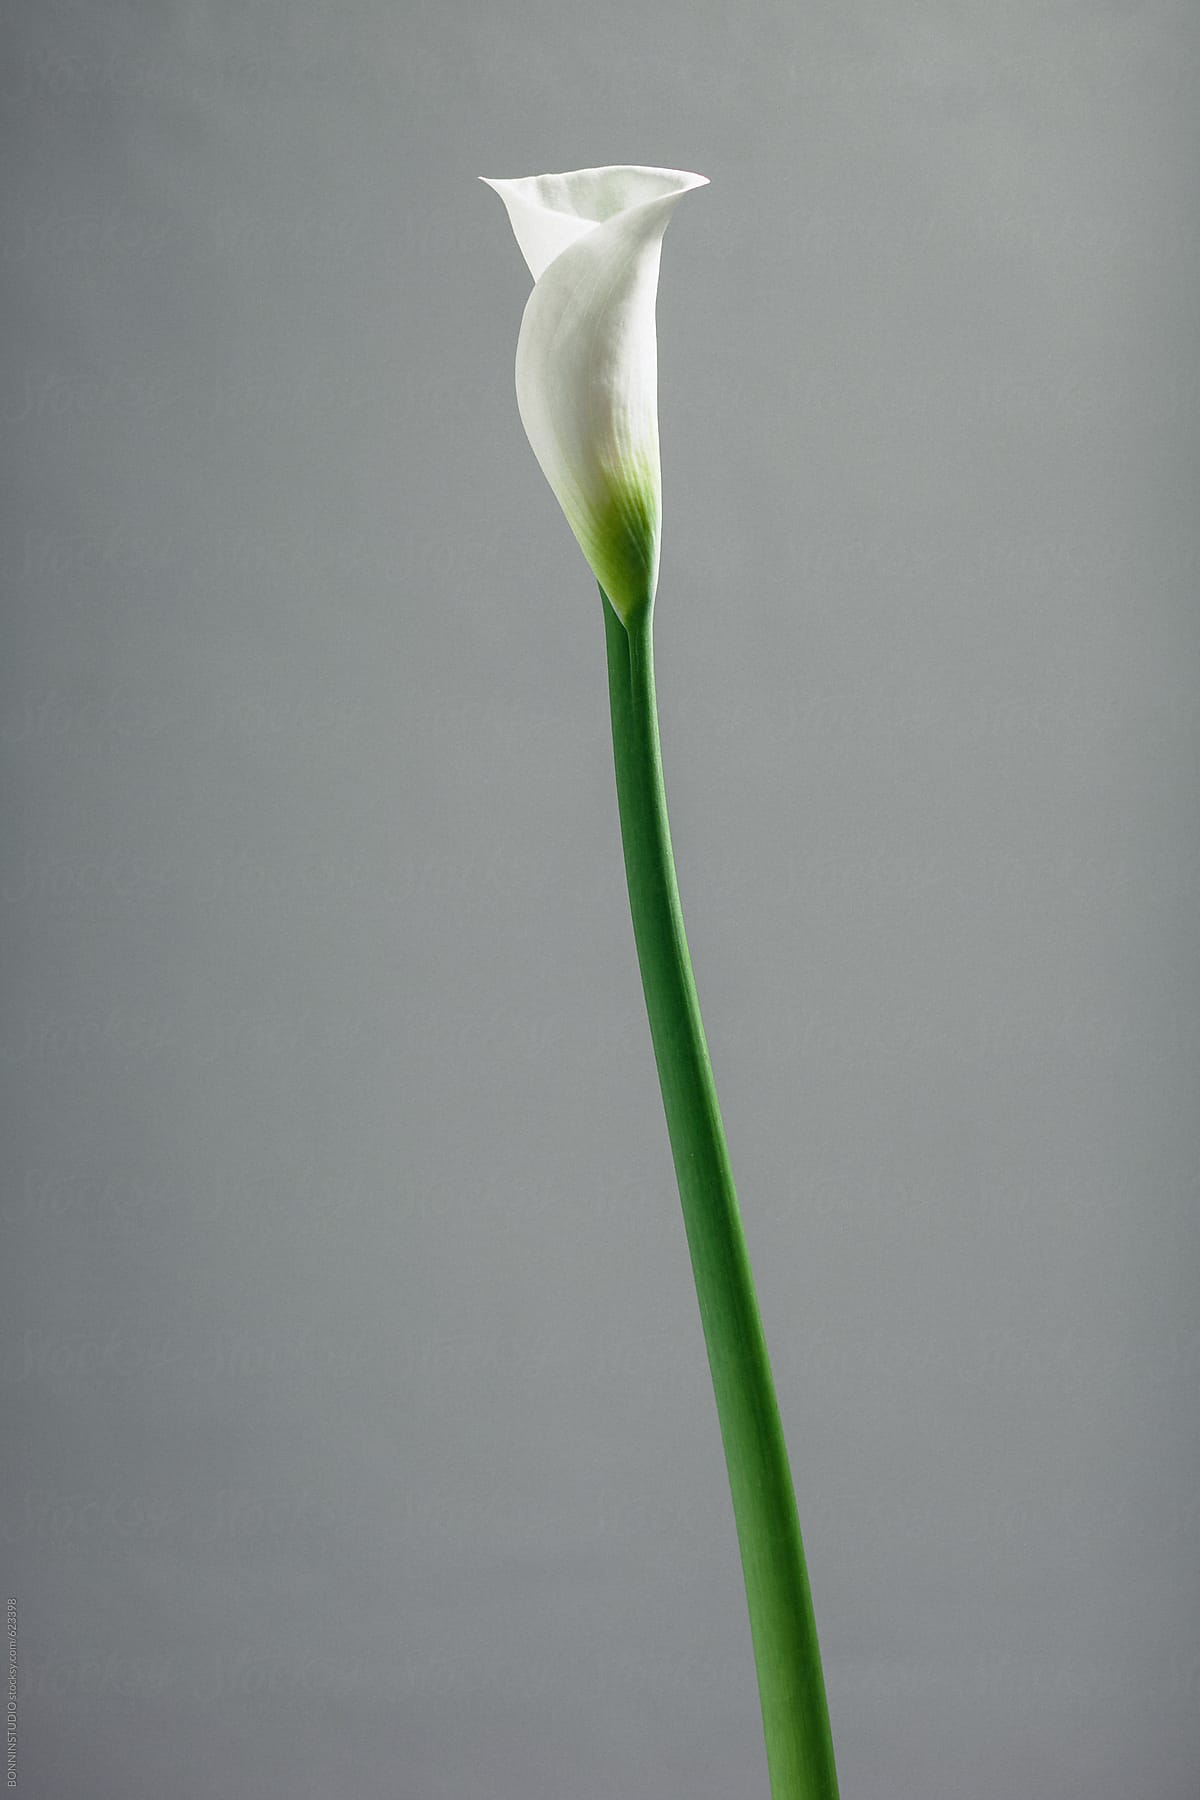 Beautiful white flower on grey background.